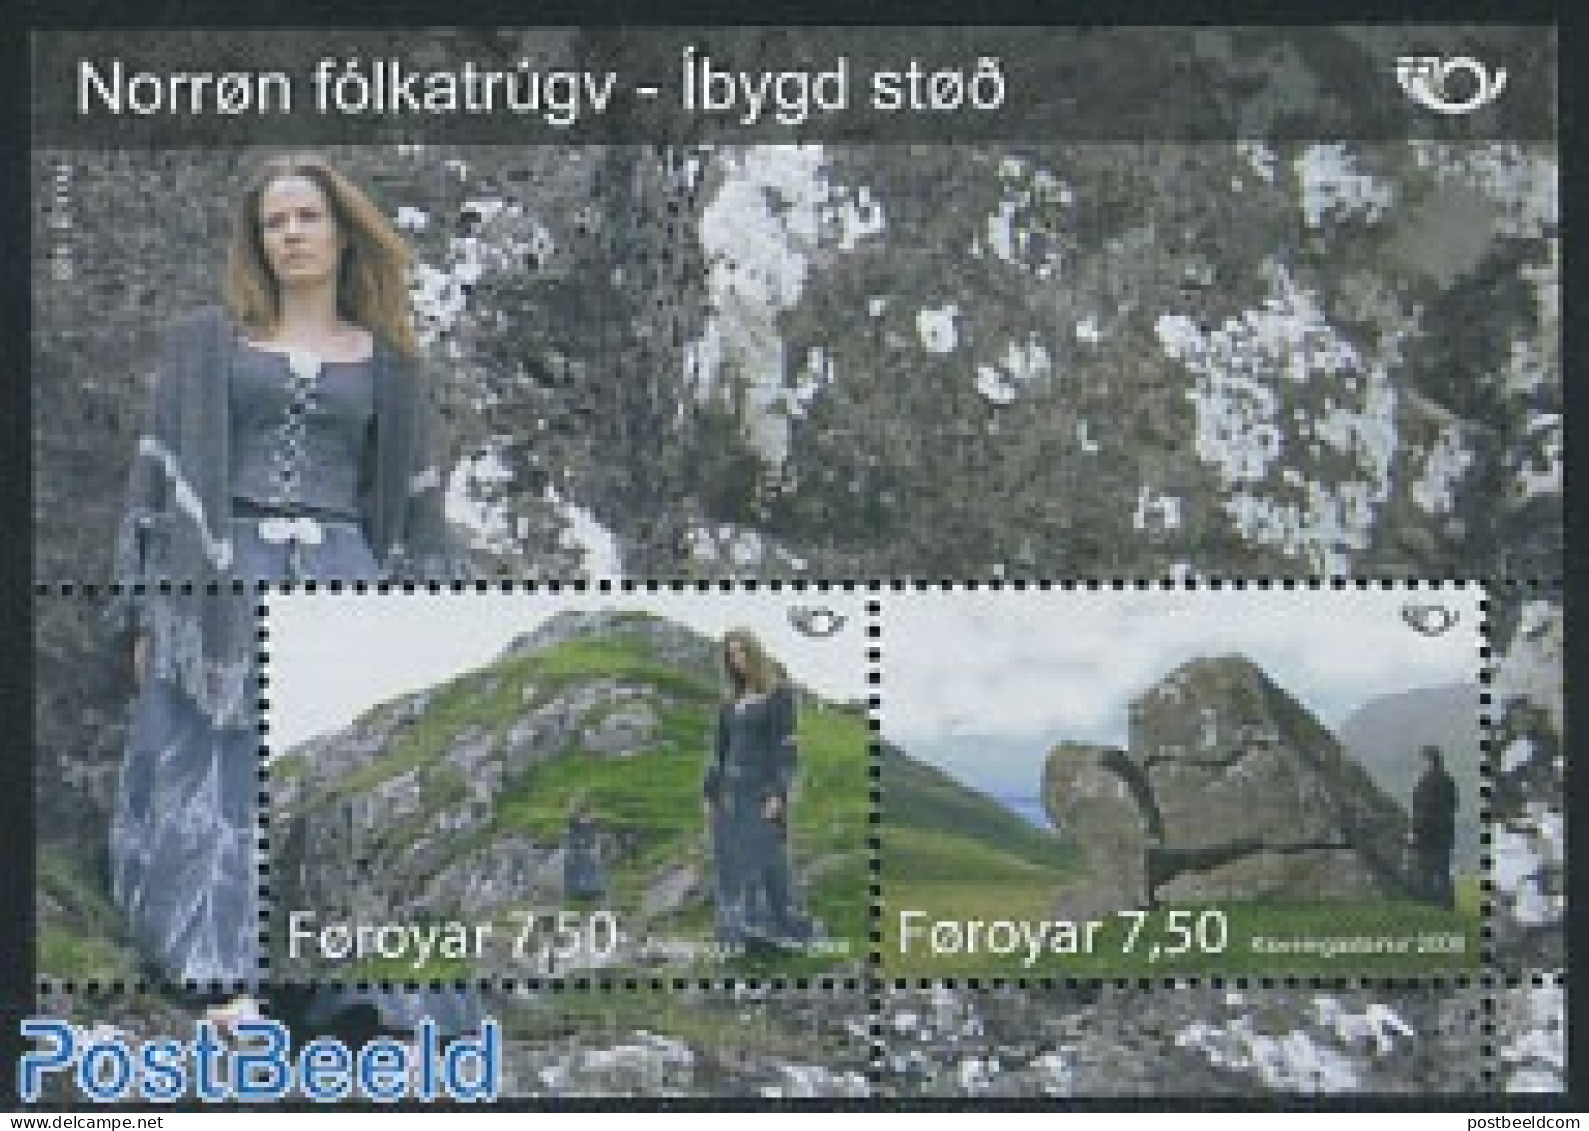 Faroe Islands 2008 Nordic, Mythology S/s, Mint NH, History - Europa Hang-on Issues - Art - Fairytales - Europäischer Gedanke